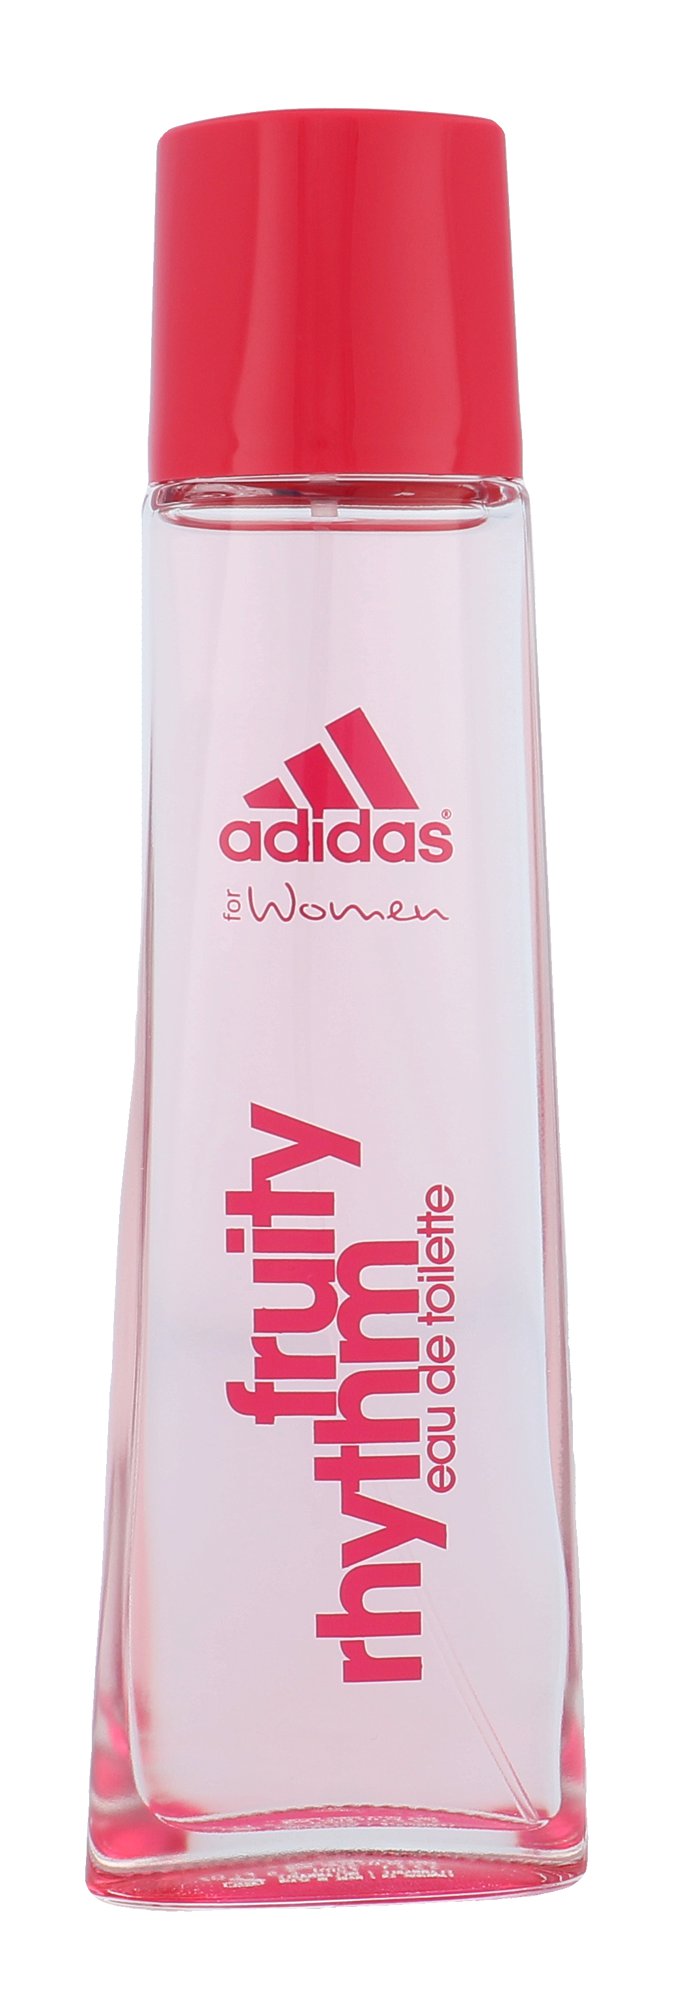 Adidas Fruity Rhythm For Women, Toaletní voda 75ml